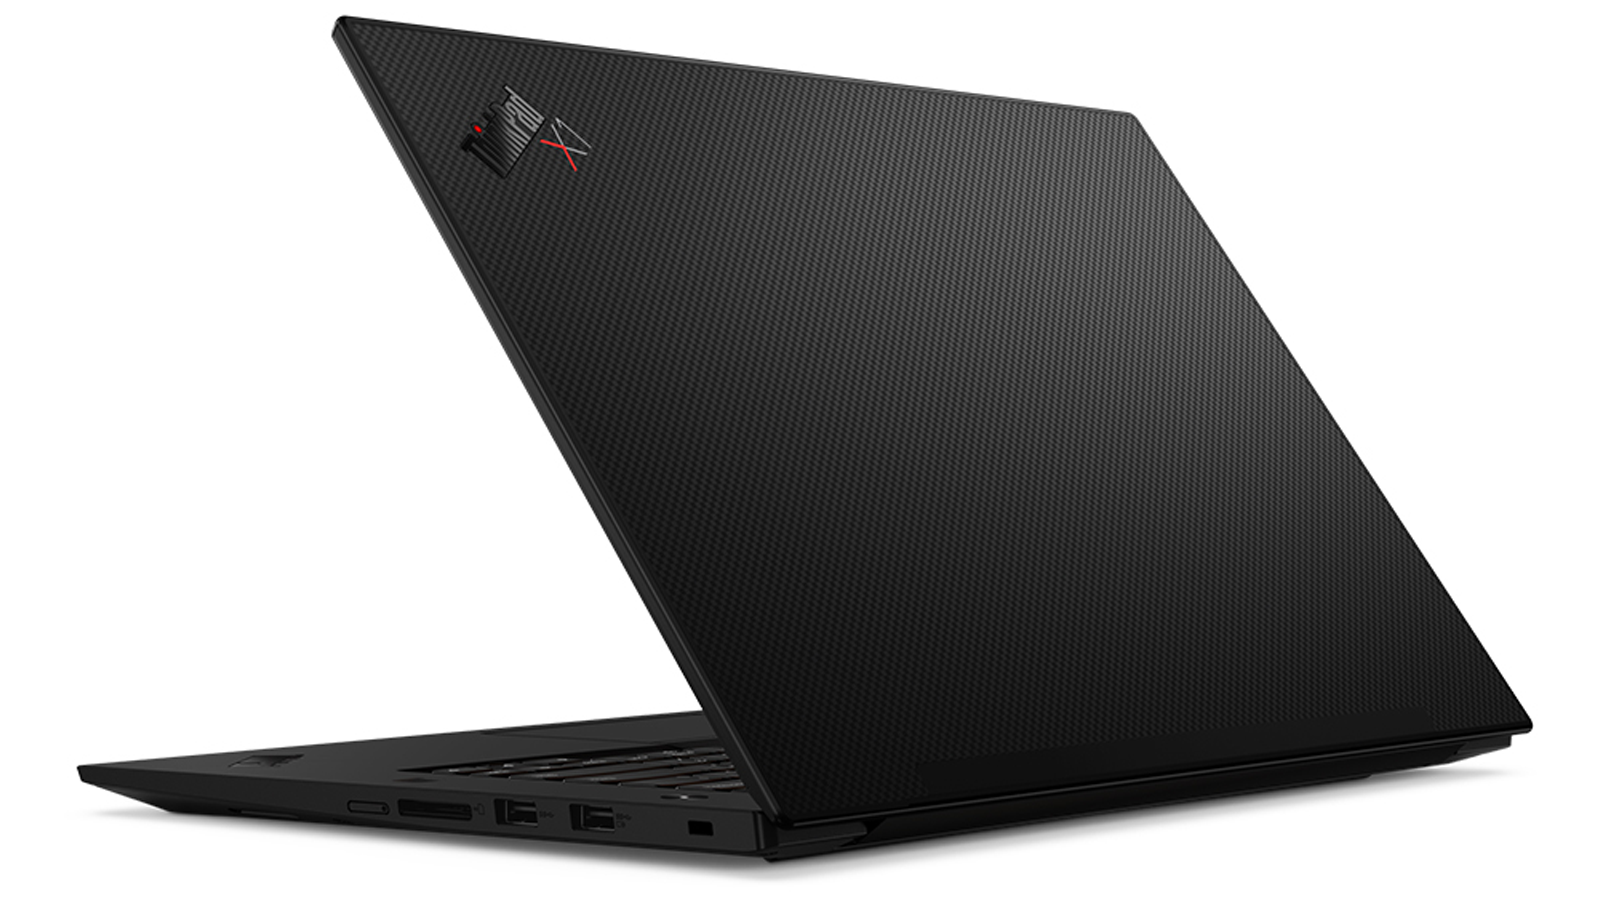 Lenovo ThinkPad X1 Extreme Gen 3 nắp bằng sợi carbon